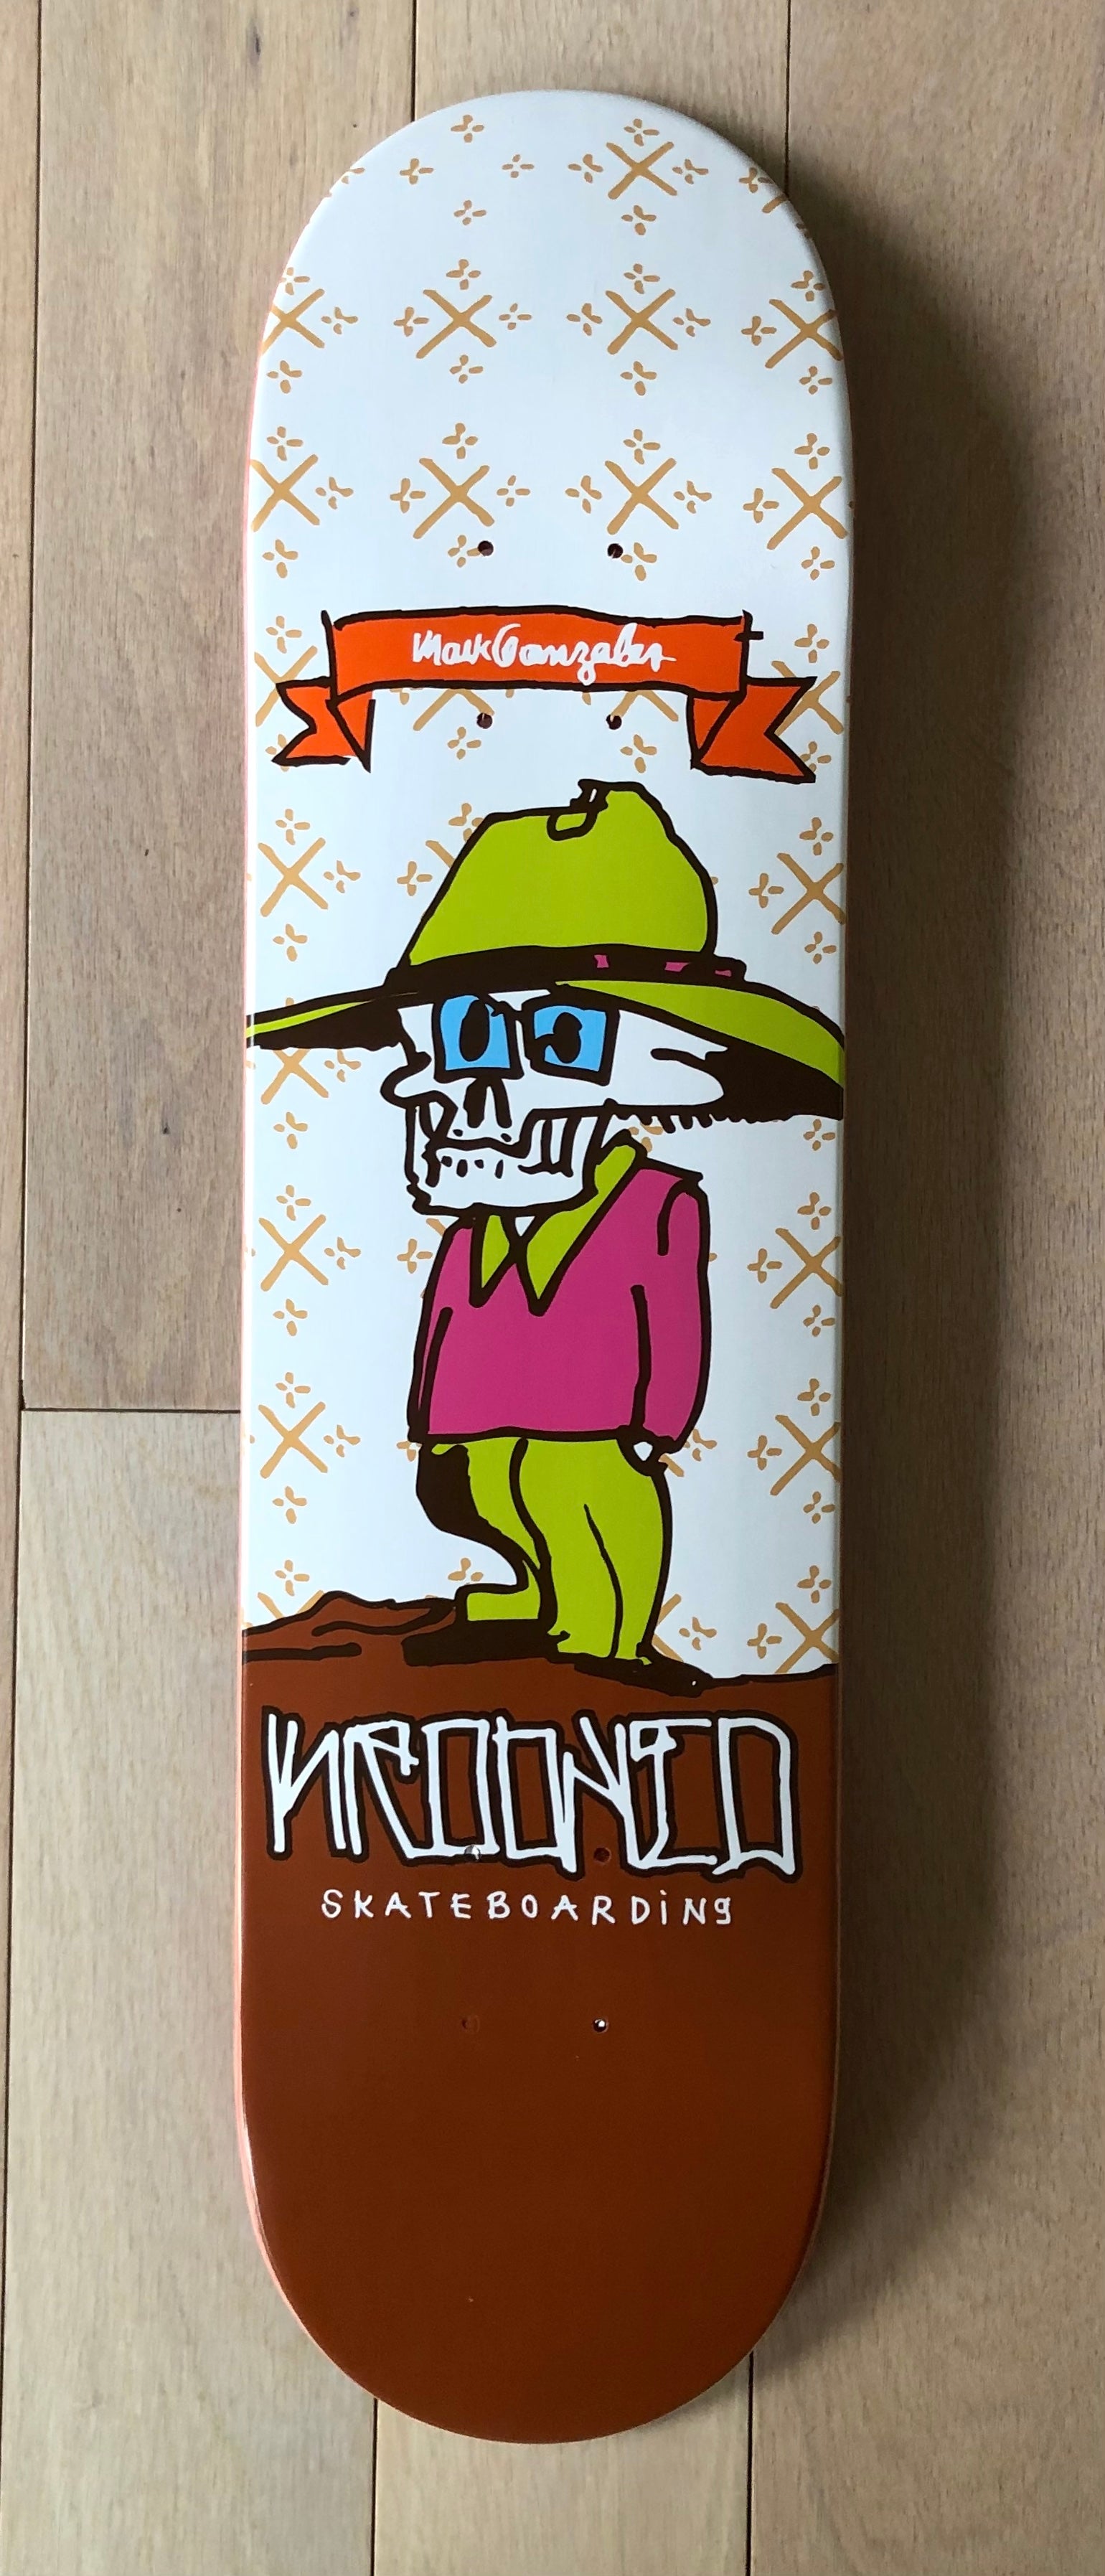 Mark Gonzales x Krooked Skateboards "Cholito", 2003